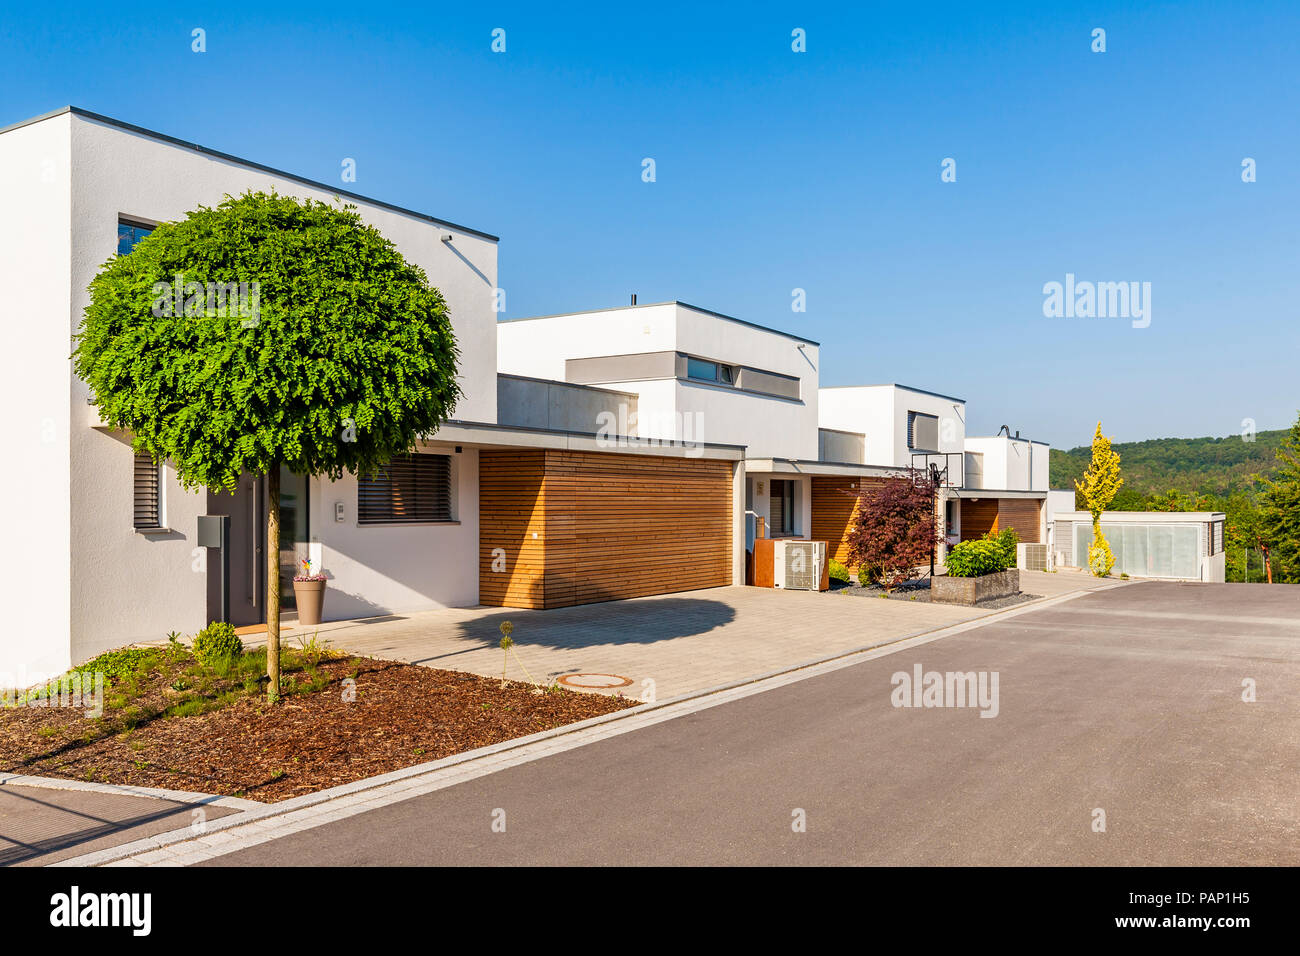 Germany, Blaustein, energy saving one-family houses Stock Photo